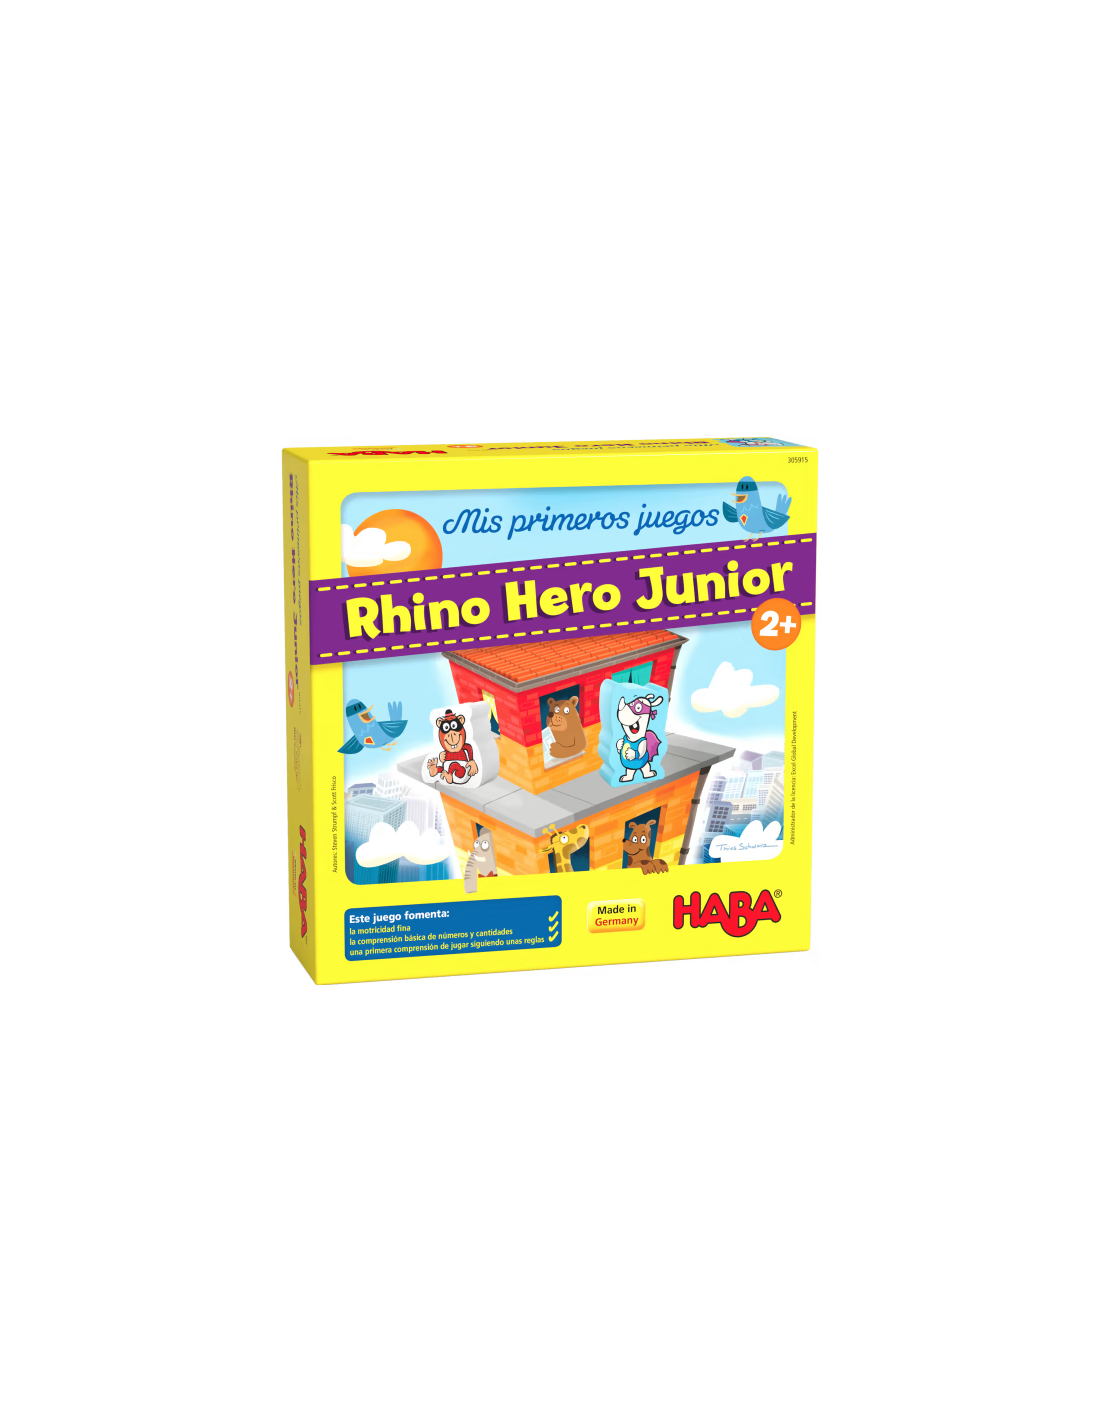 Rhino Hero Junior - Juegos